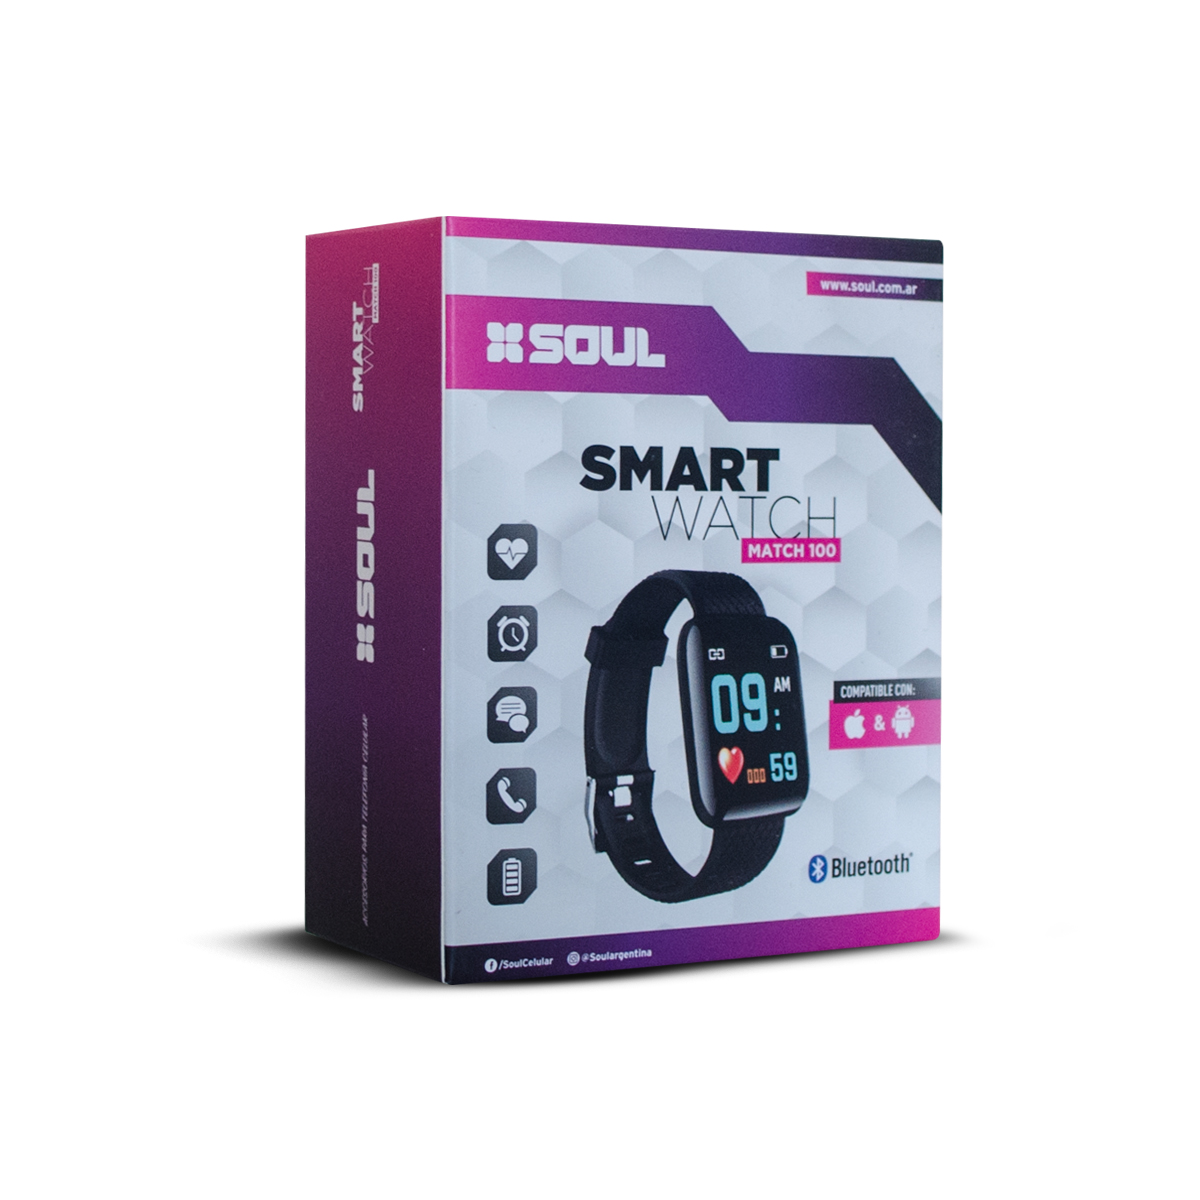 Smartwatch Match100